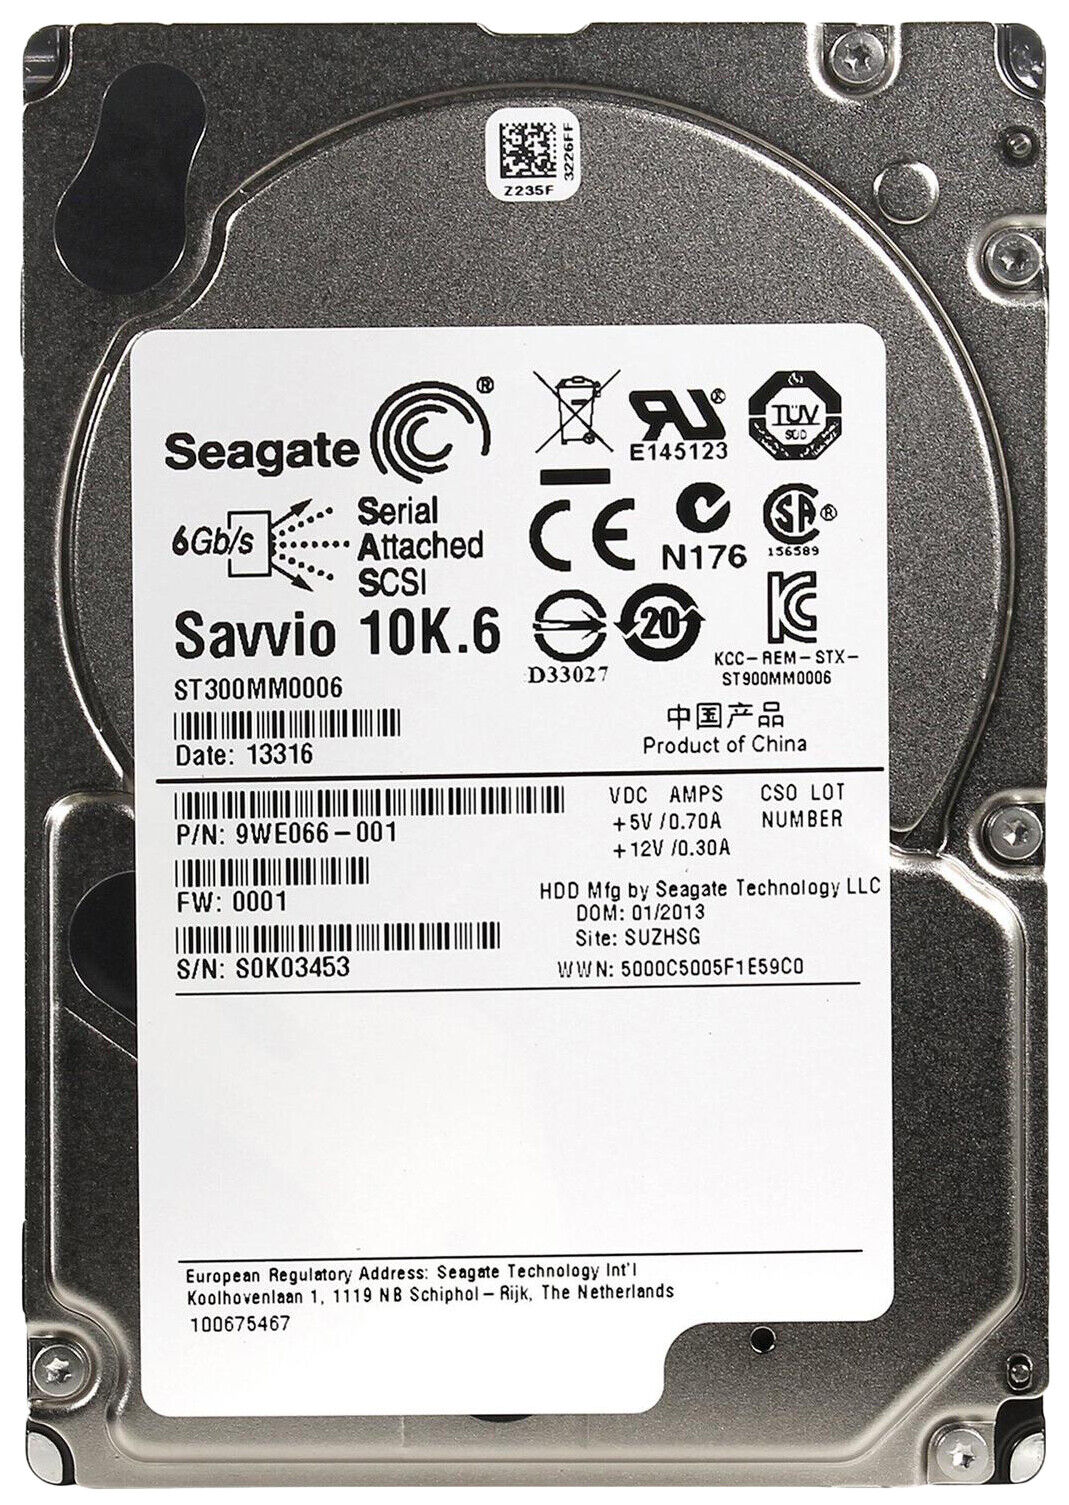 Seagate ST300MM0006 300 GB SAS 2 2.5 in Enterprise Hard Drive